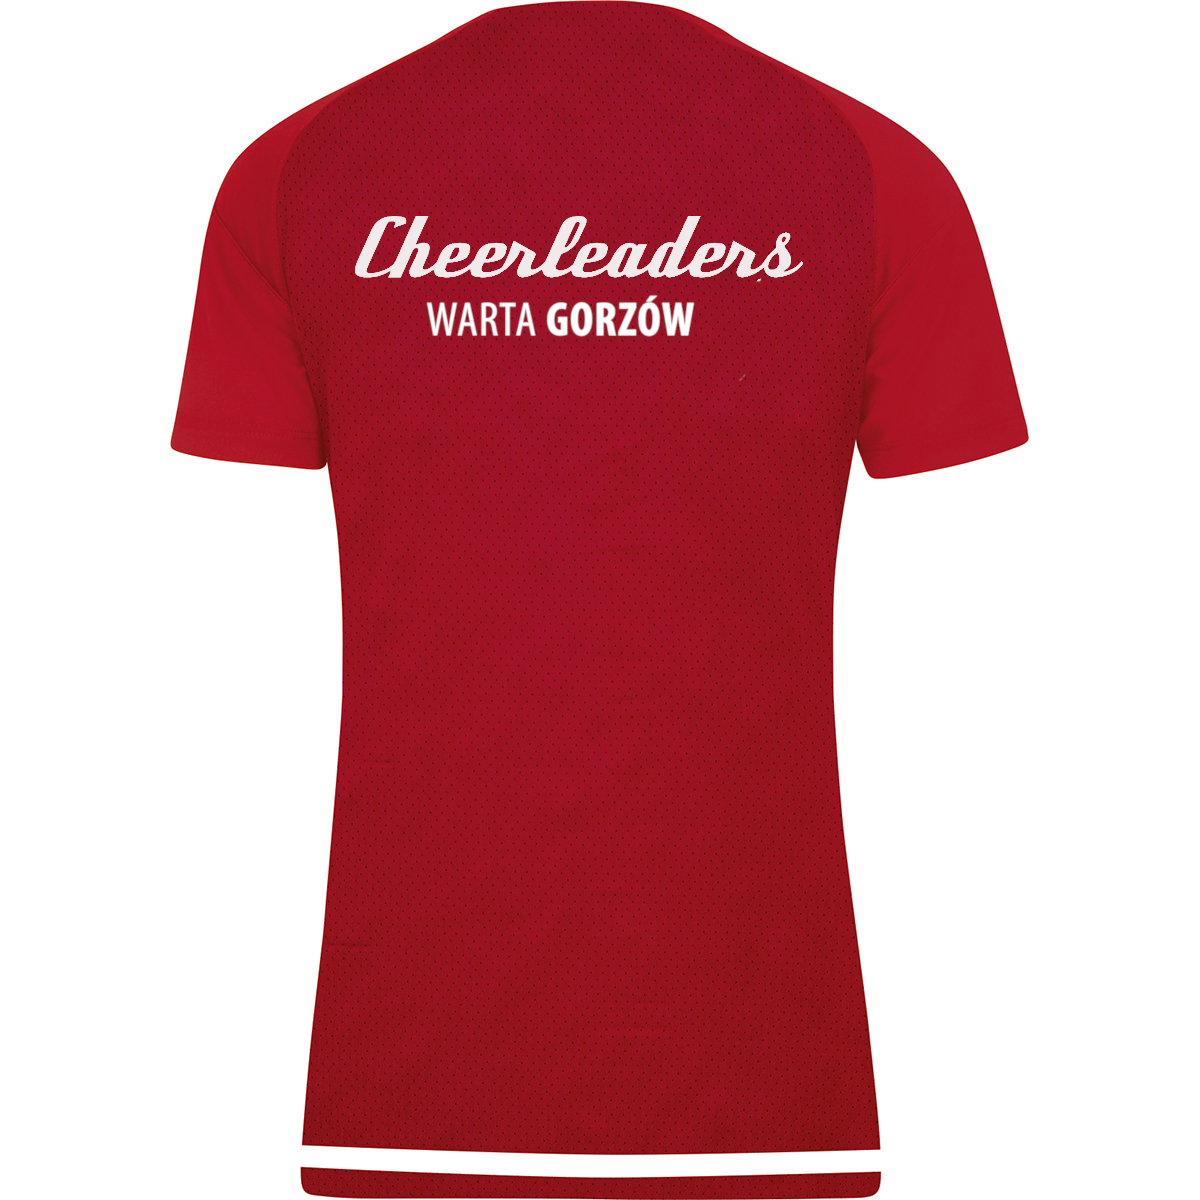 Cheerleaders Warta Koszulka reprezentacyjna